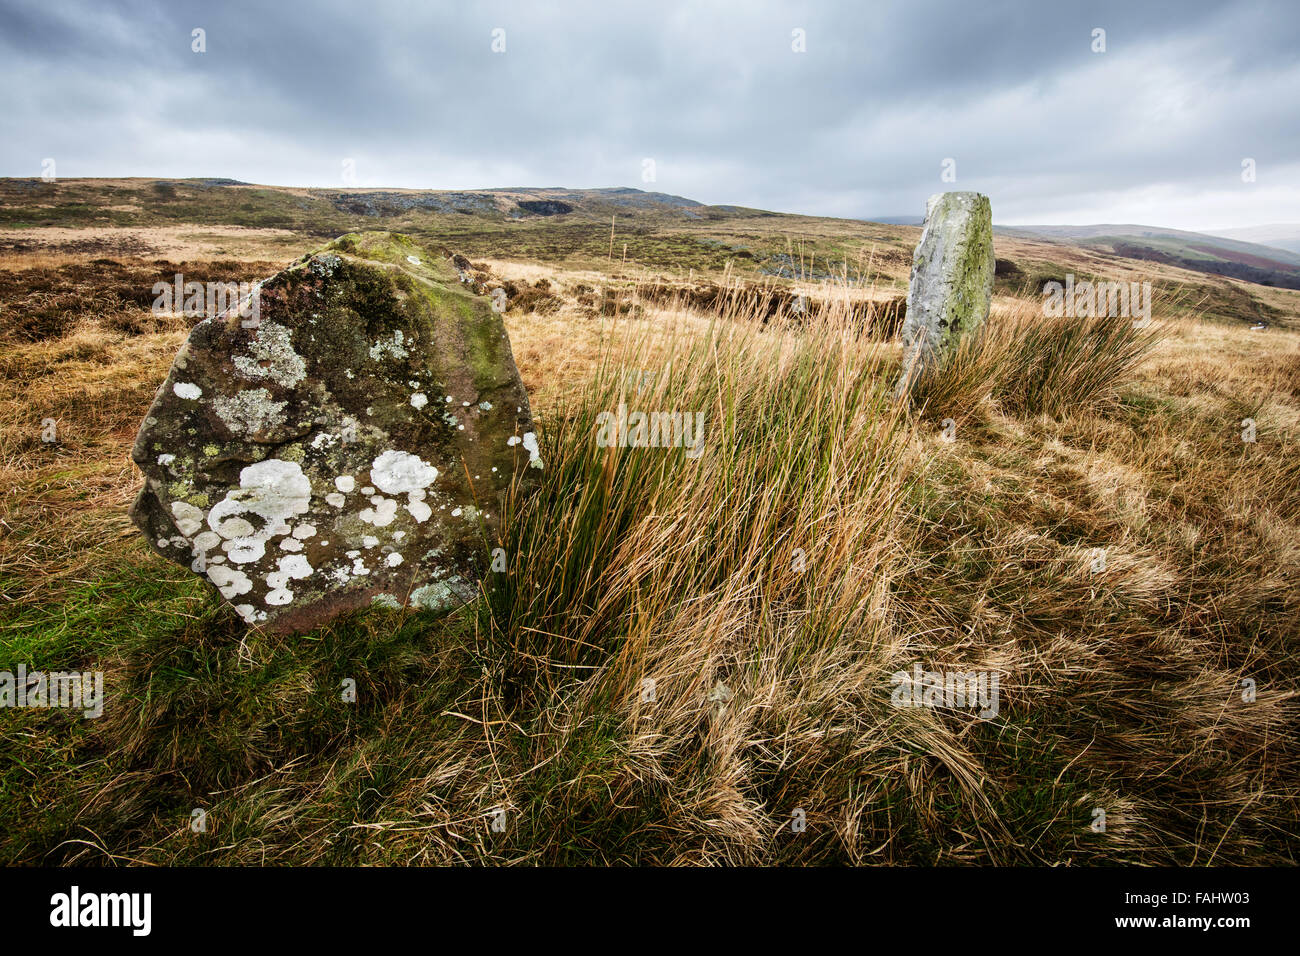 Spricht Maen Stein Zeile auf Moorland oberhalb Glyntawe in Swansea Tal Brecon Beacons South Wales Großbritannien Stockfoto